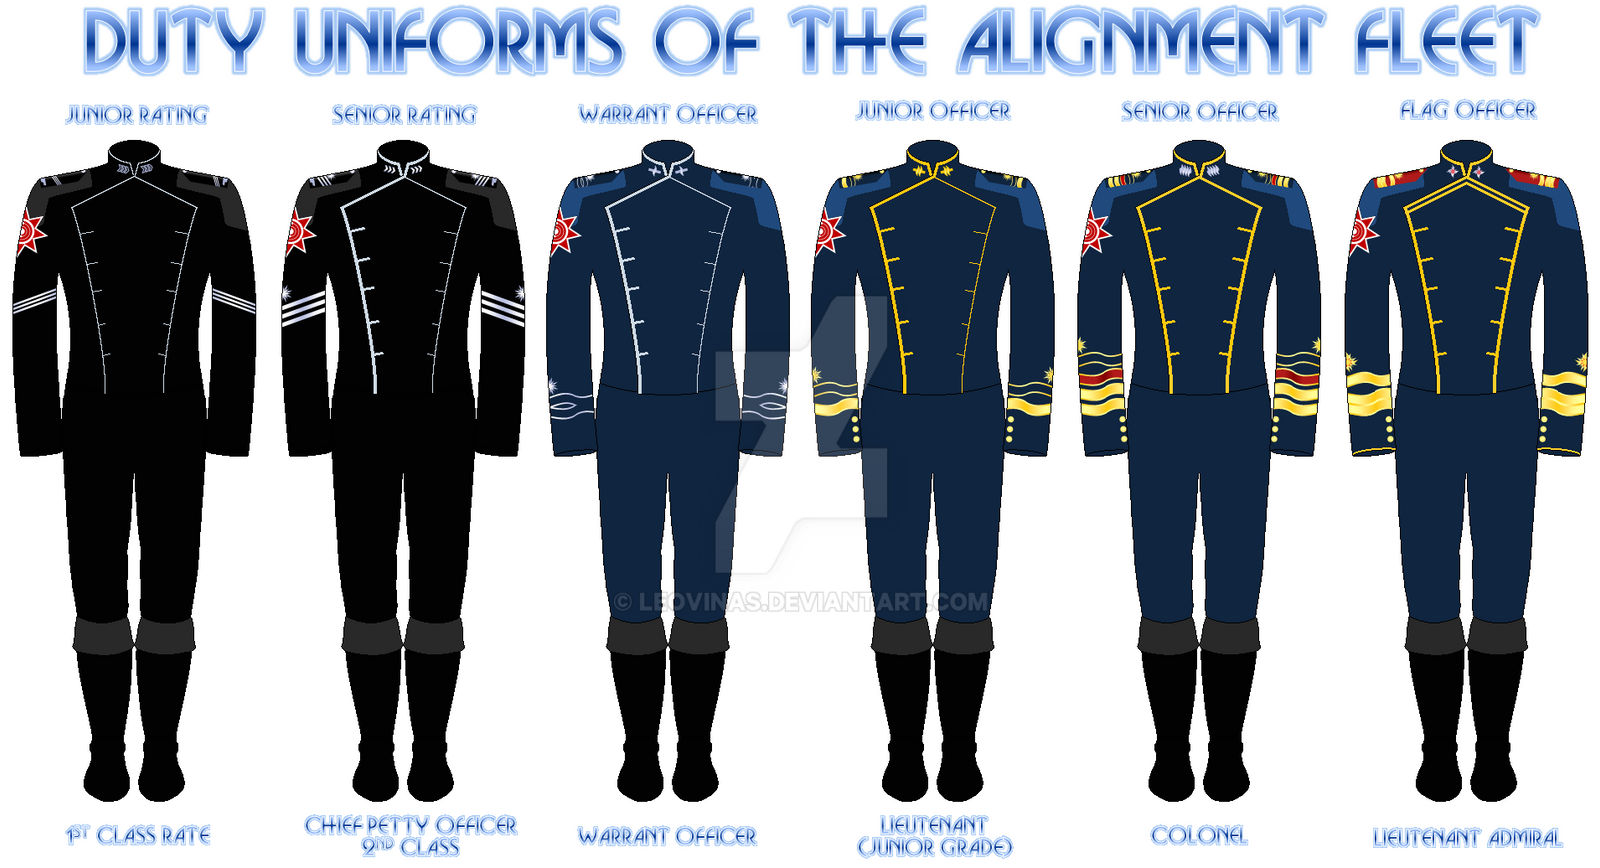 sci_fi__alignment_fleet_uniforms_by_leovinas_d8rdts7-fullview.jpg